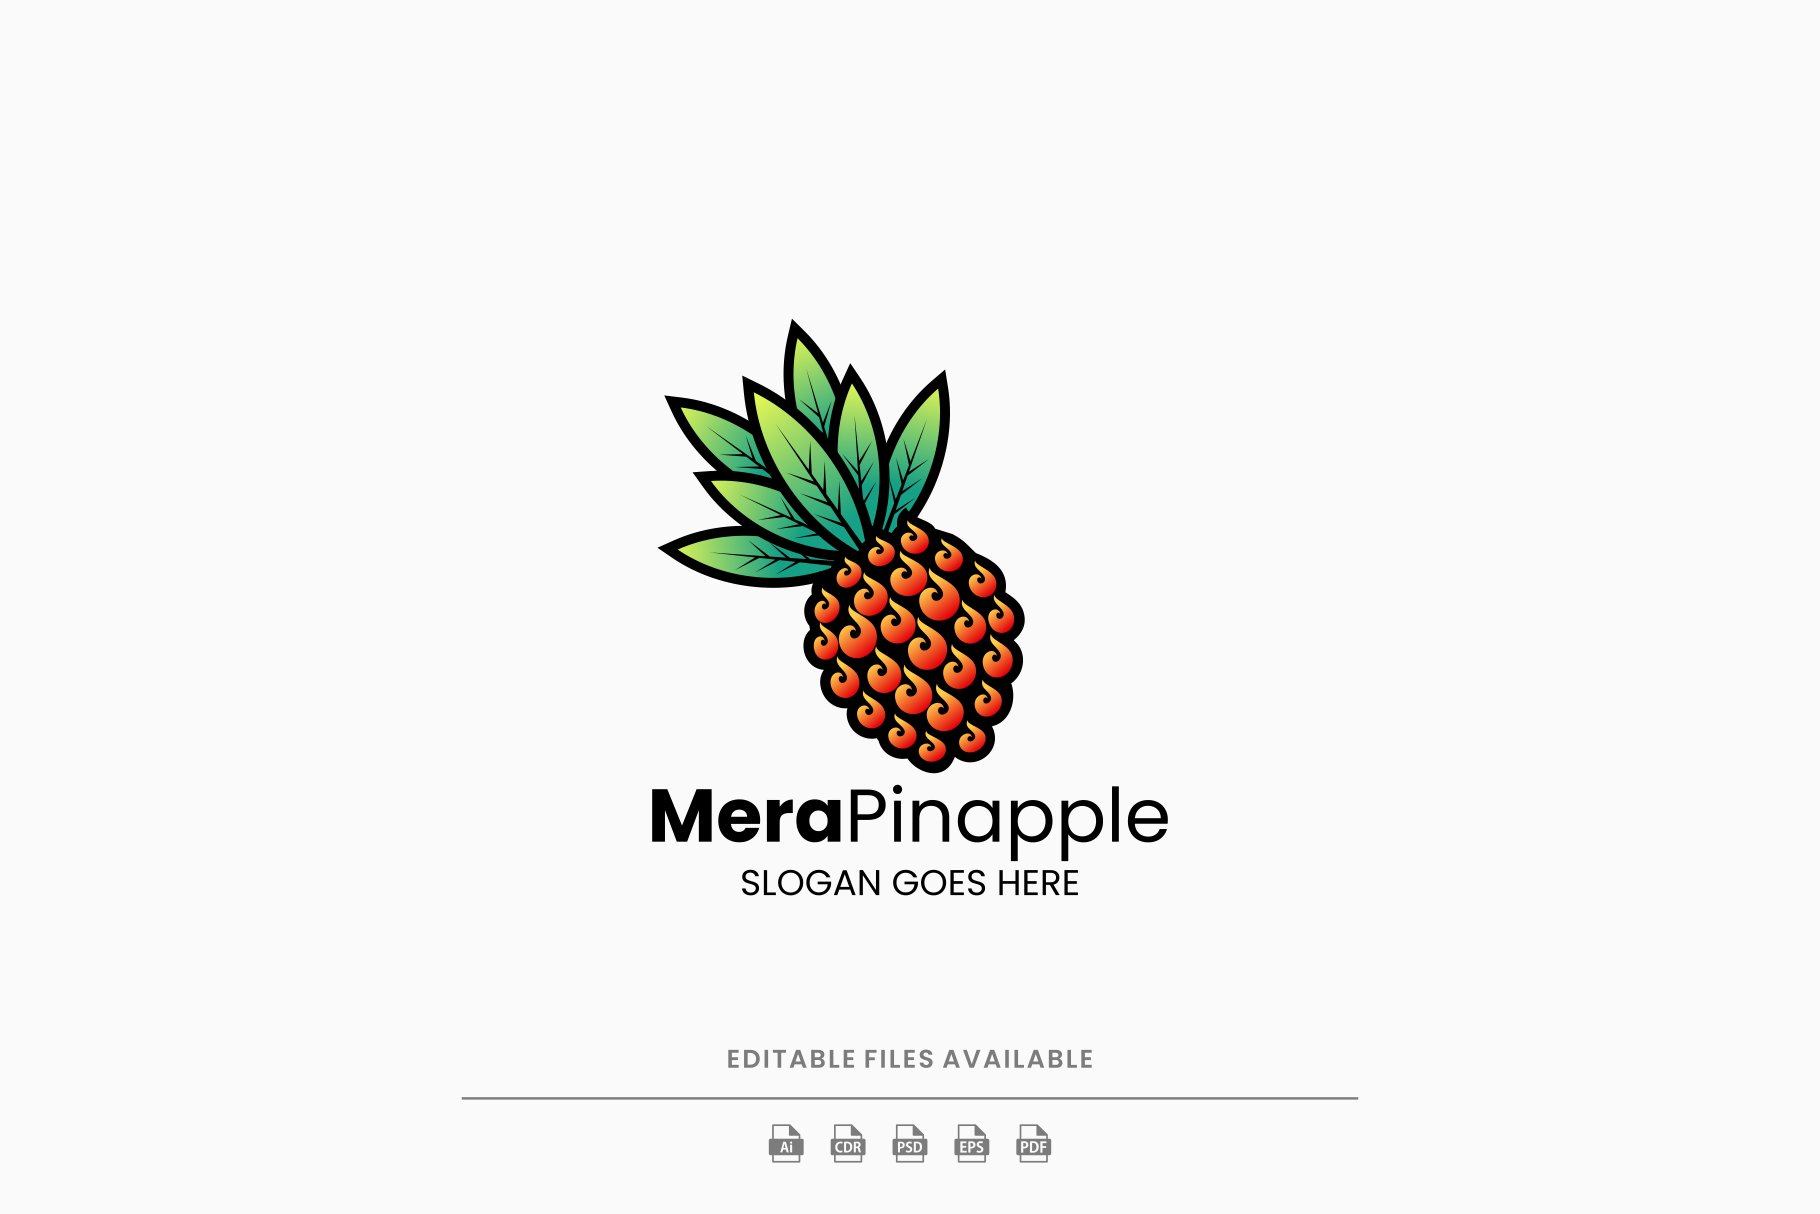 Merapi Pineapple Gradient Logo cover image.